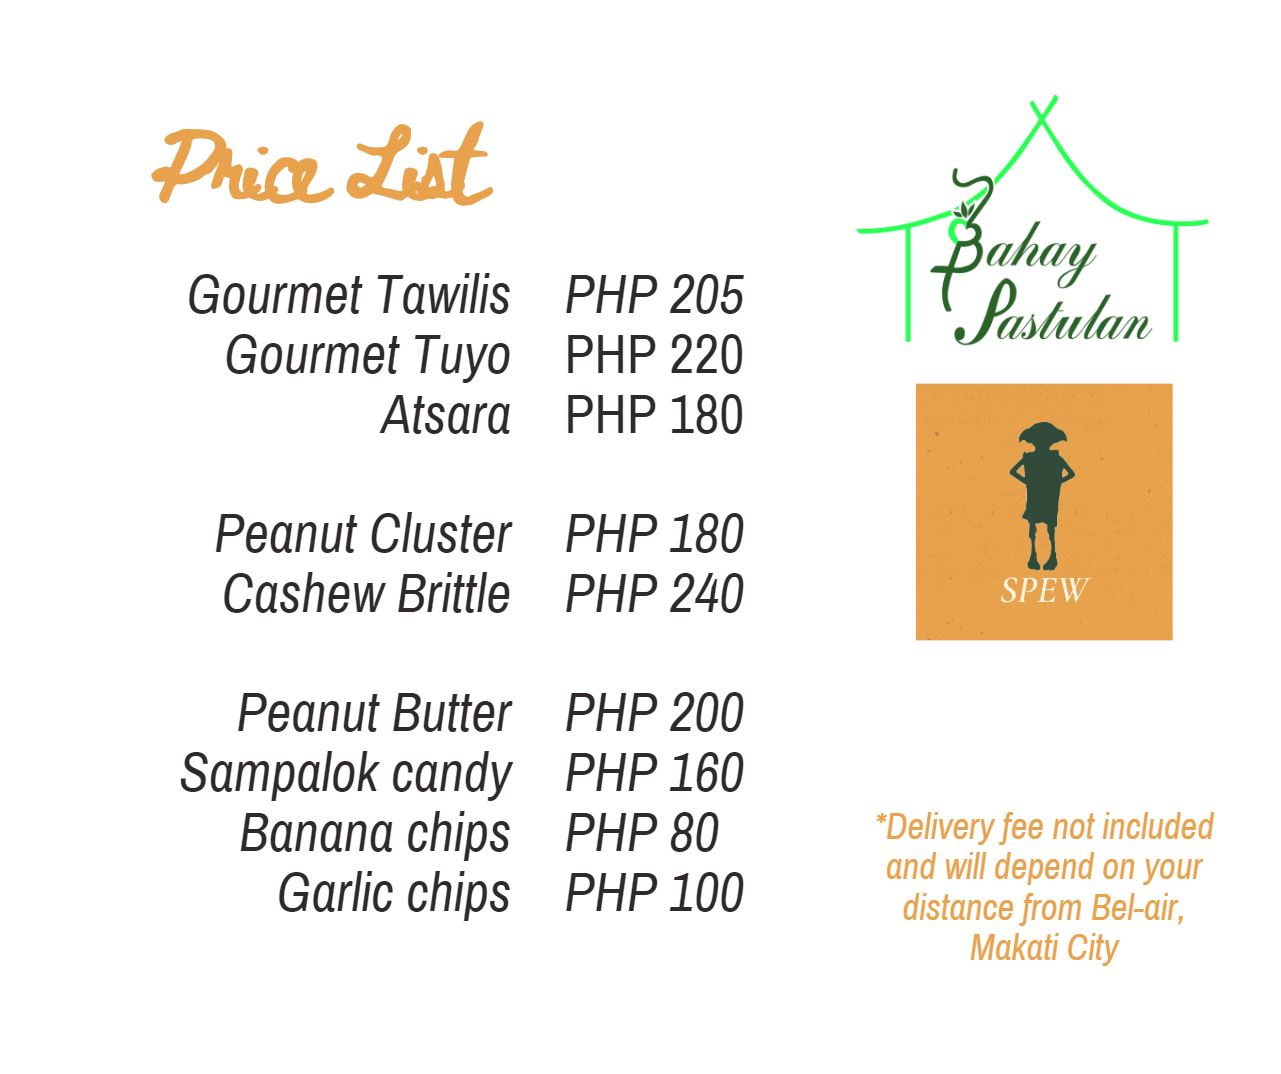 Good Shepherd Sisters' Bahay Pastulan Tagaytay price list